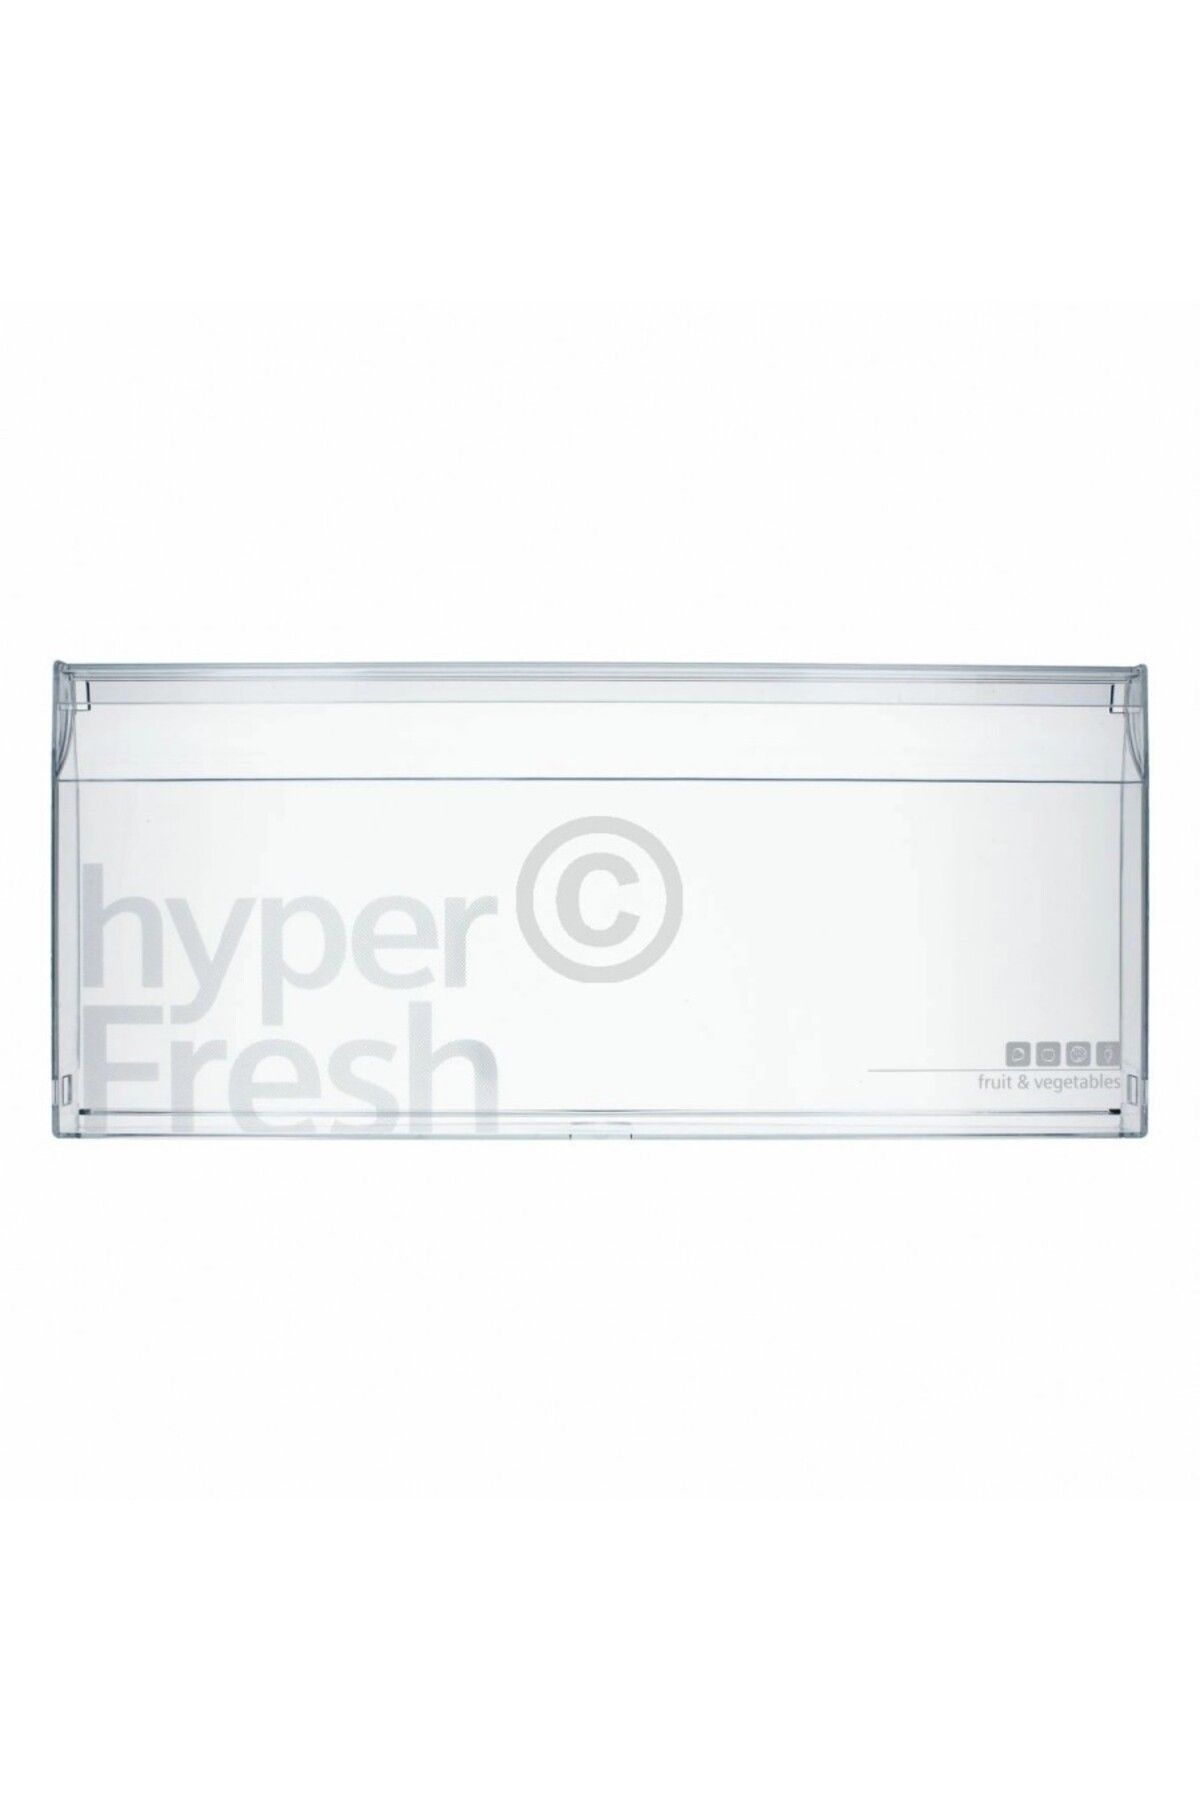 Bosch Uyumlu Buzdolabı Dondurucu Cekmece kapağı 56 x 24 CM